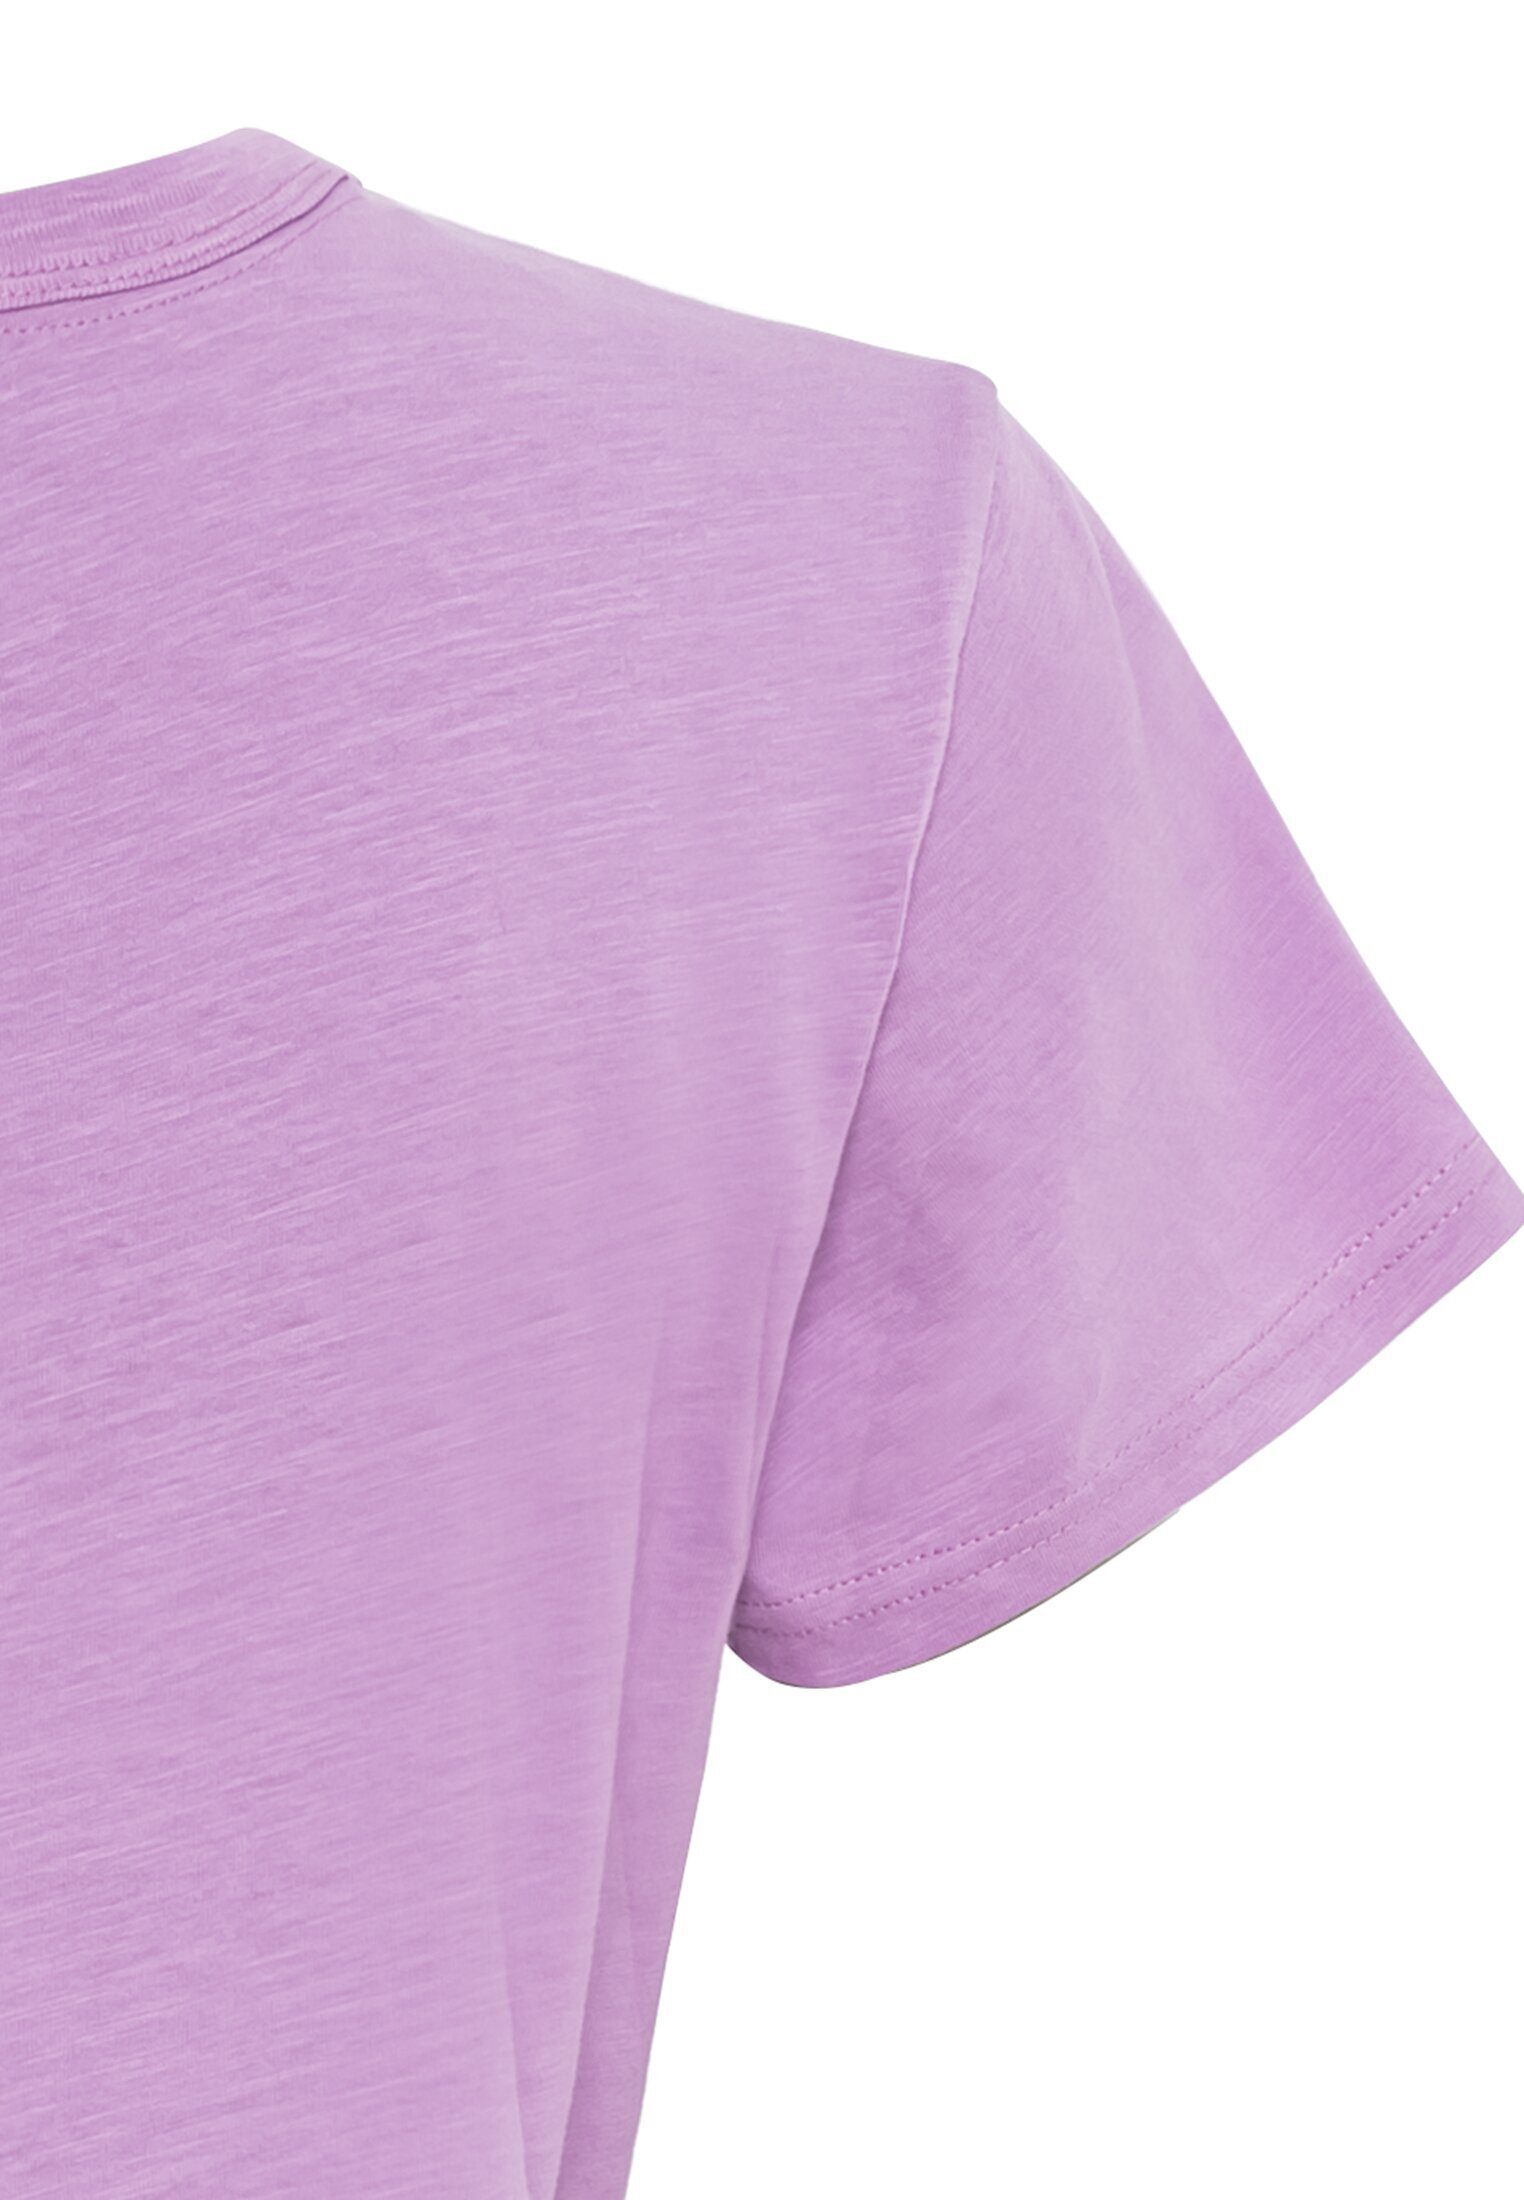 mit platziertem camel Print Print-Shirt Pink active